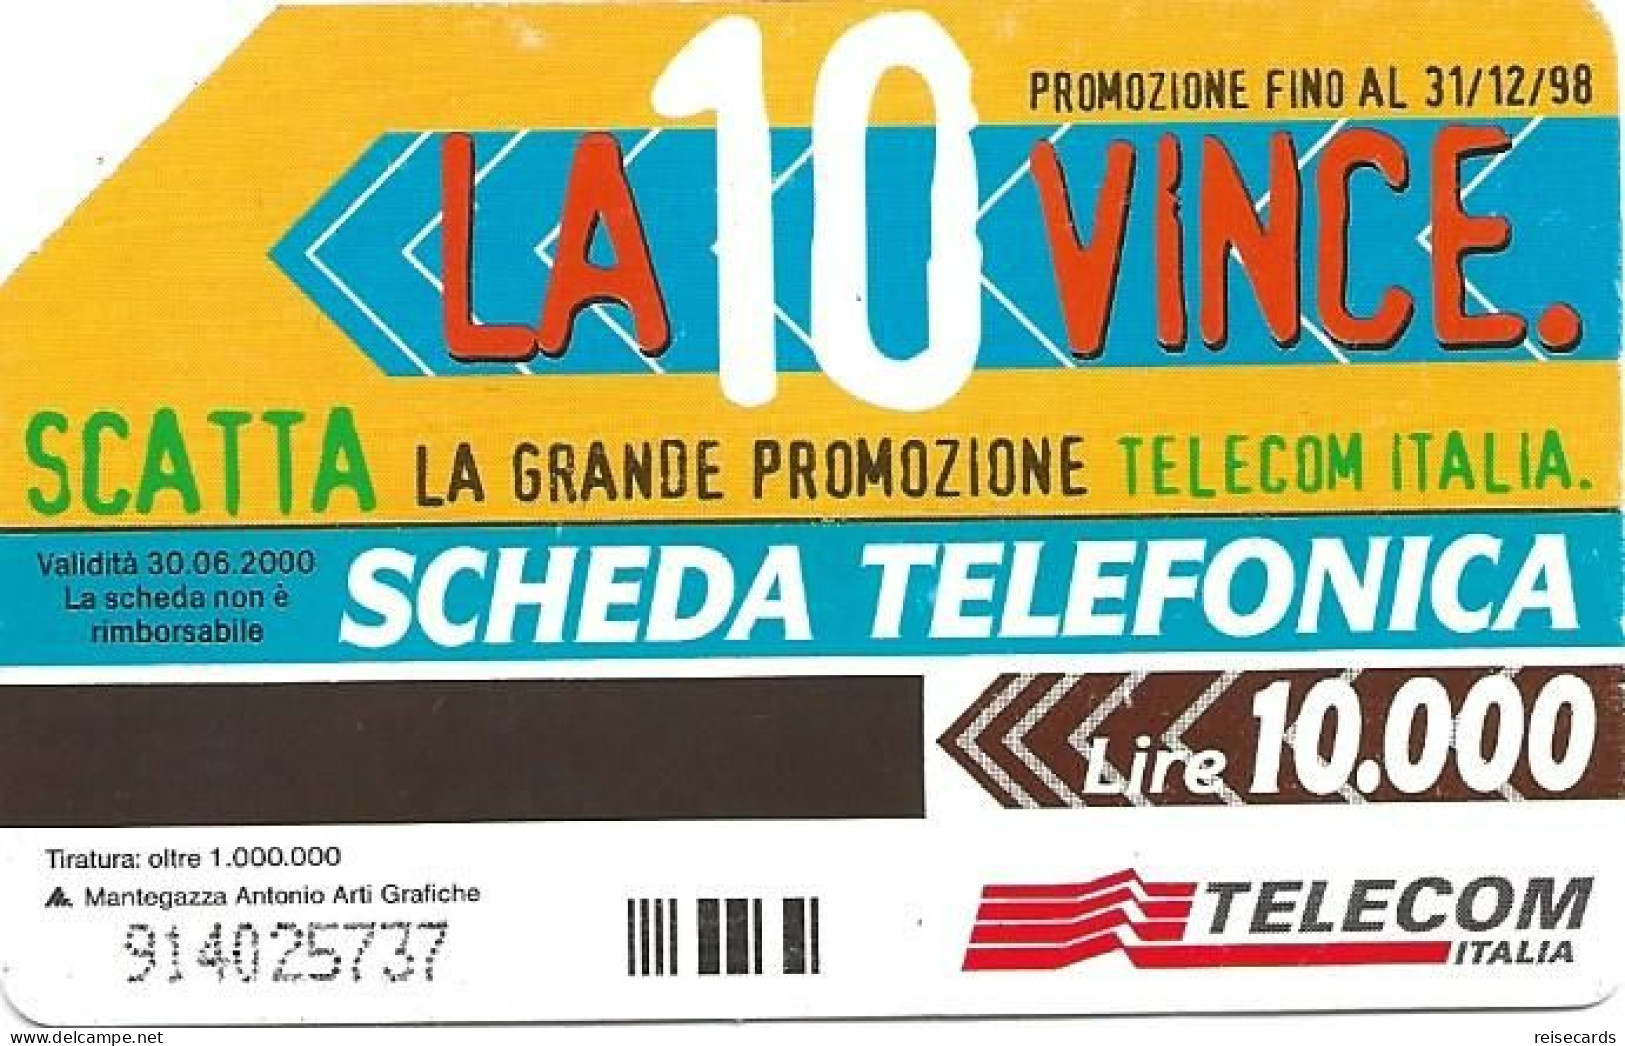 Italy: Telecom Italia - La 10 Vince - Public Advertising